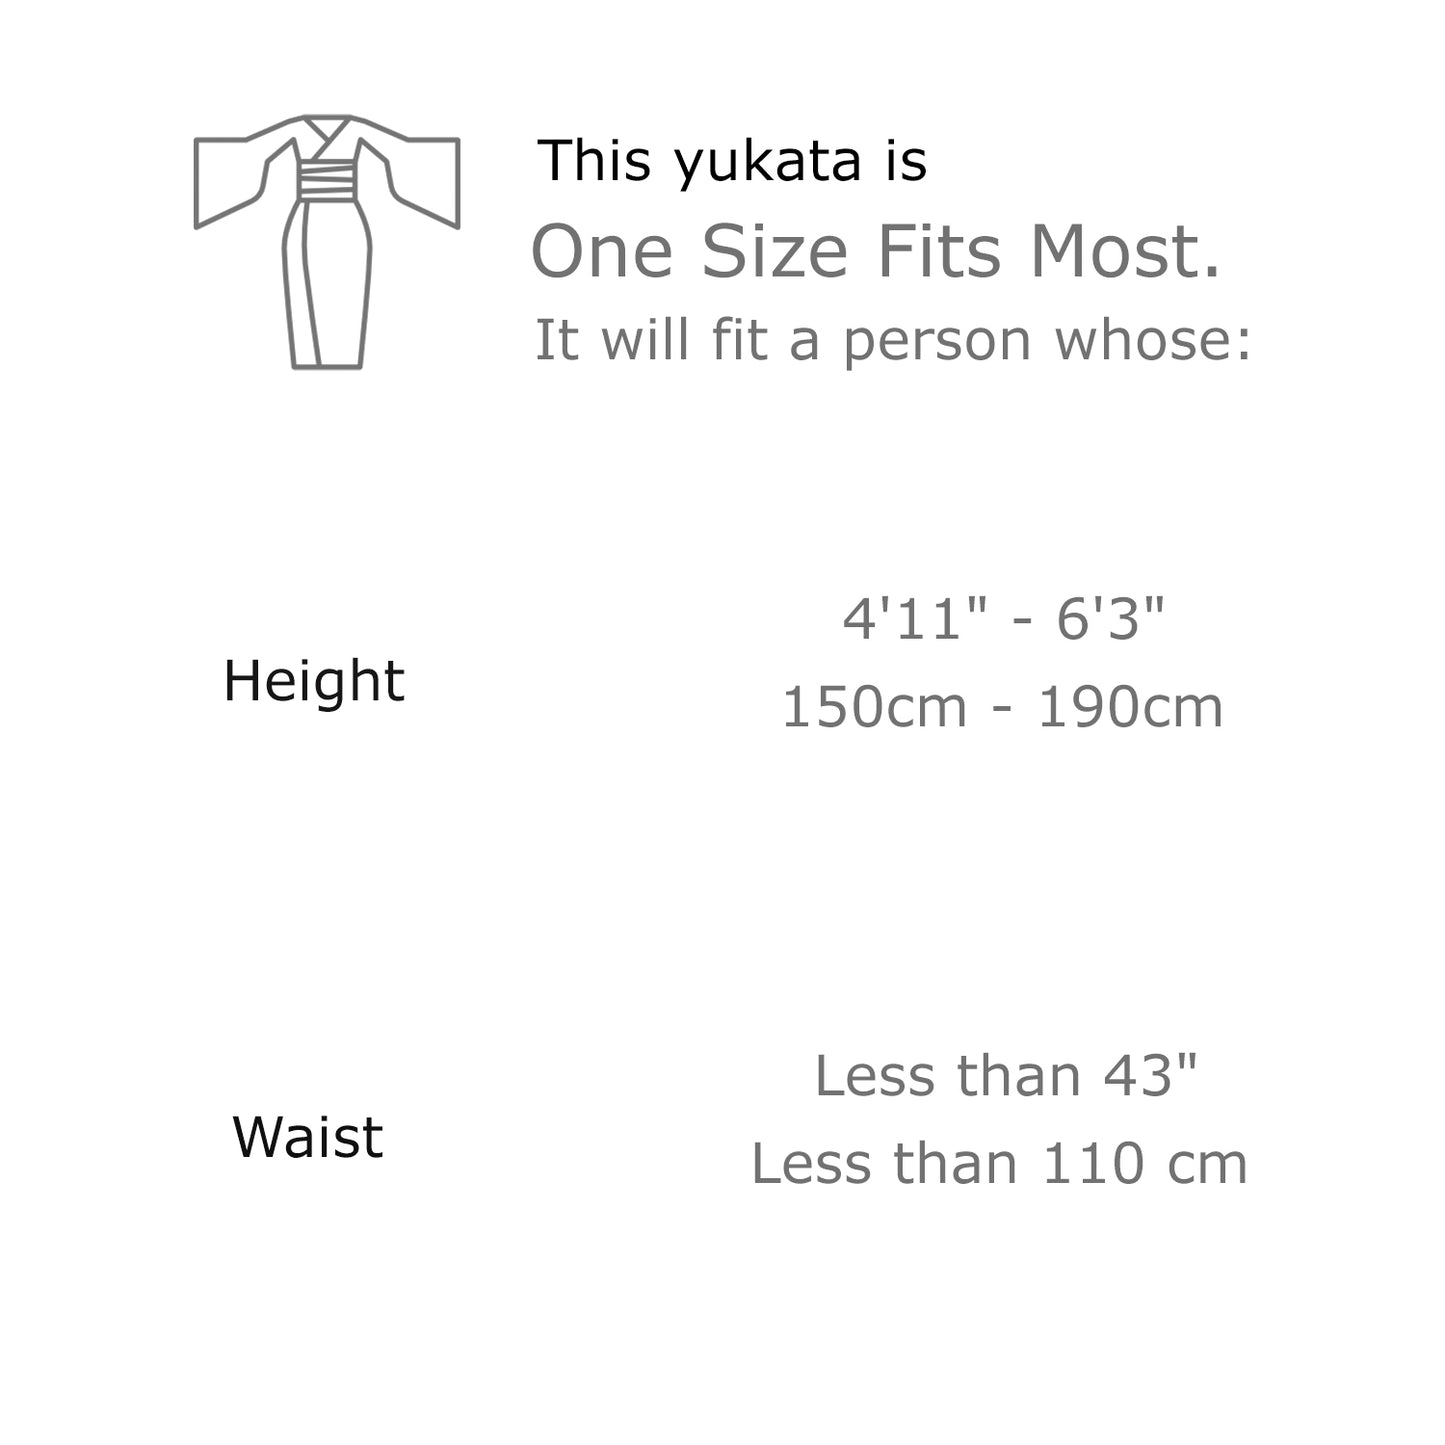 Will the yukata fits me